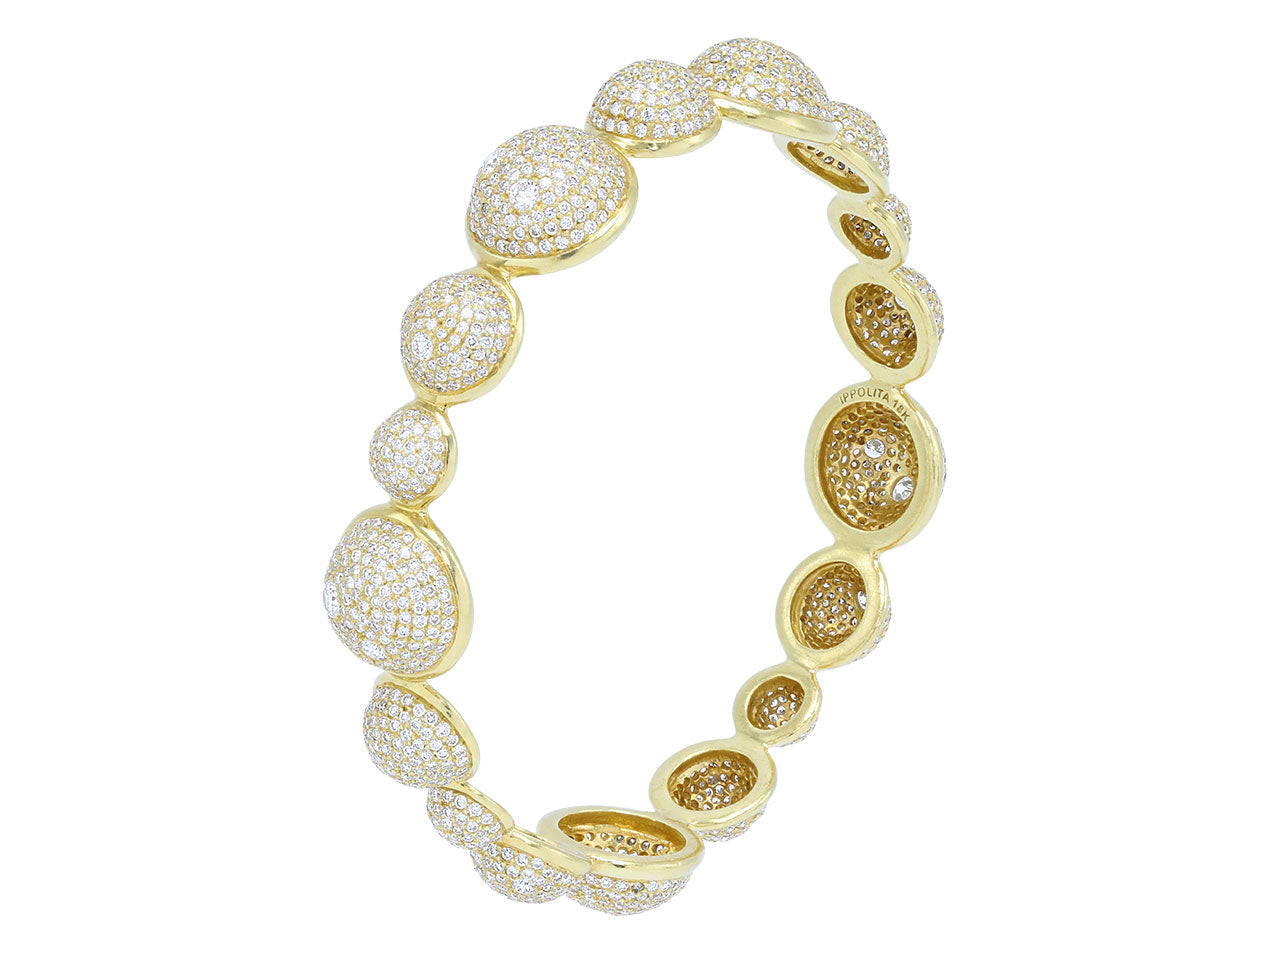 Ippolita 'Stardust' Diamond Bangle Bracelet in 18K Gold